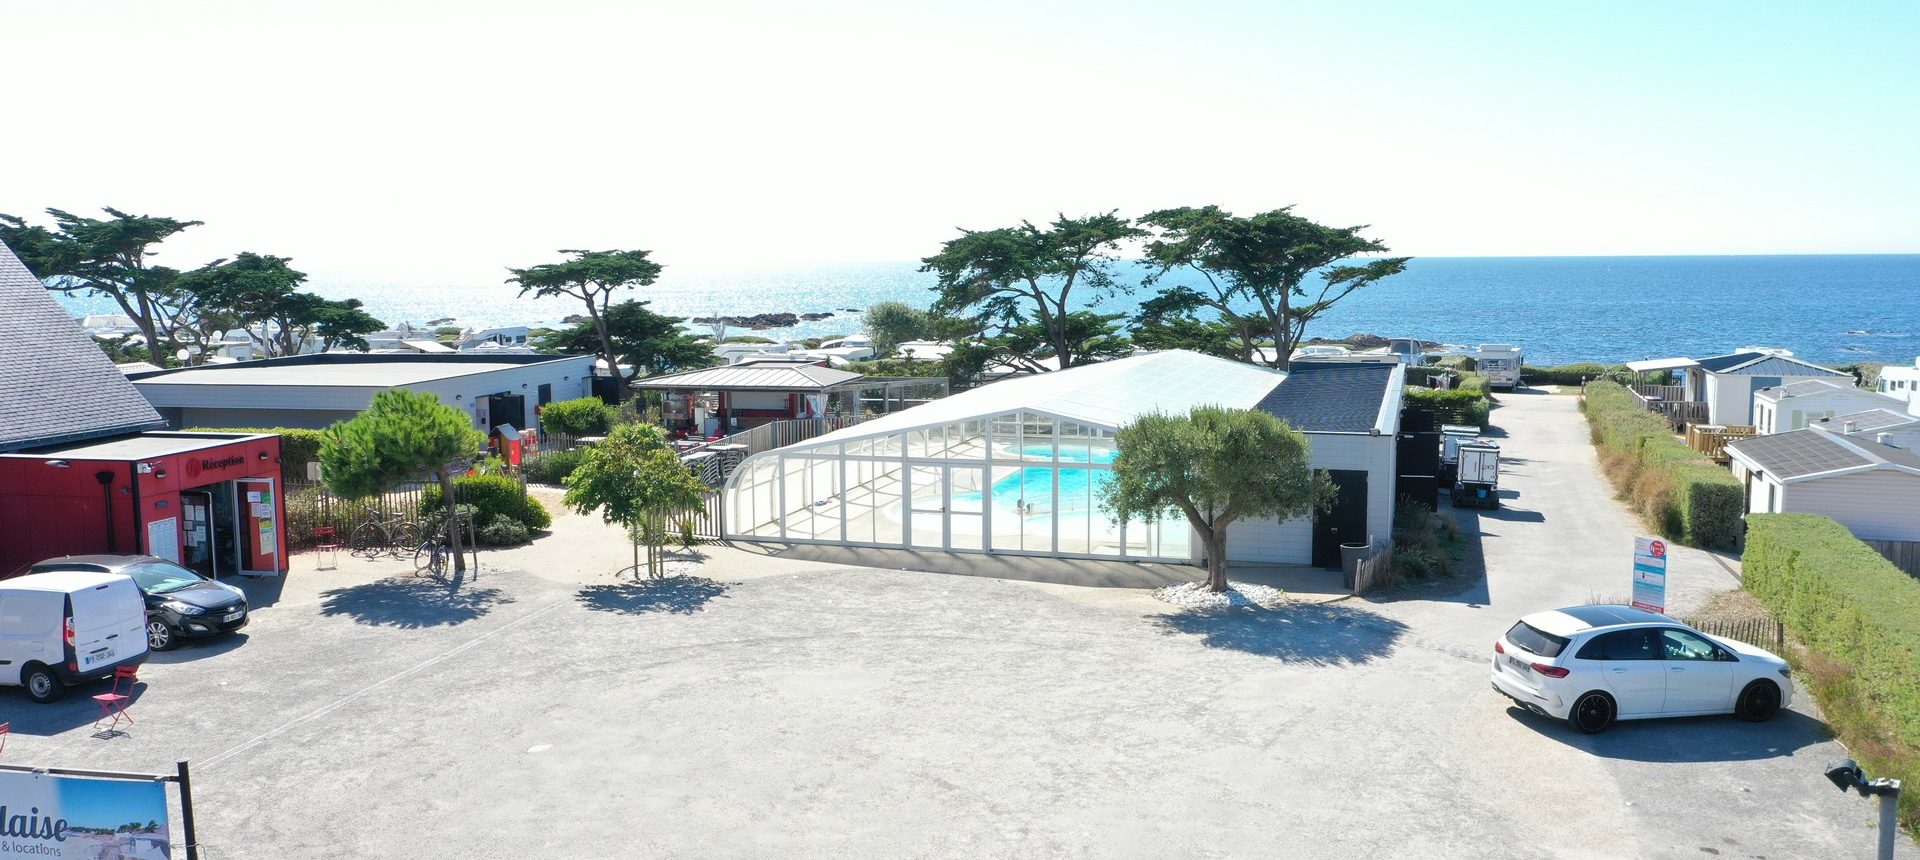 piscine couverte Camping La Falaise